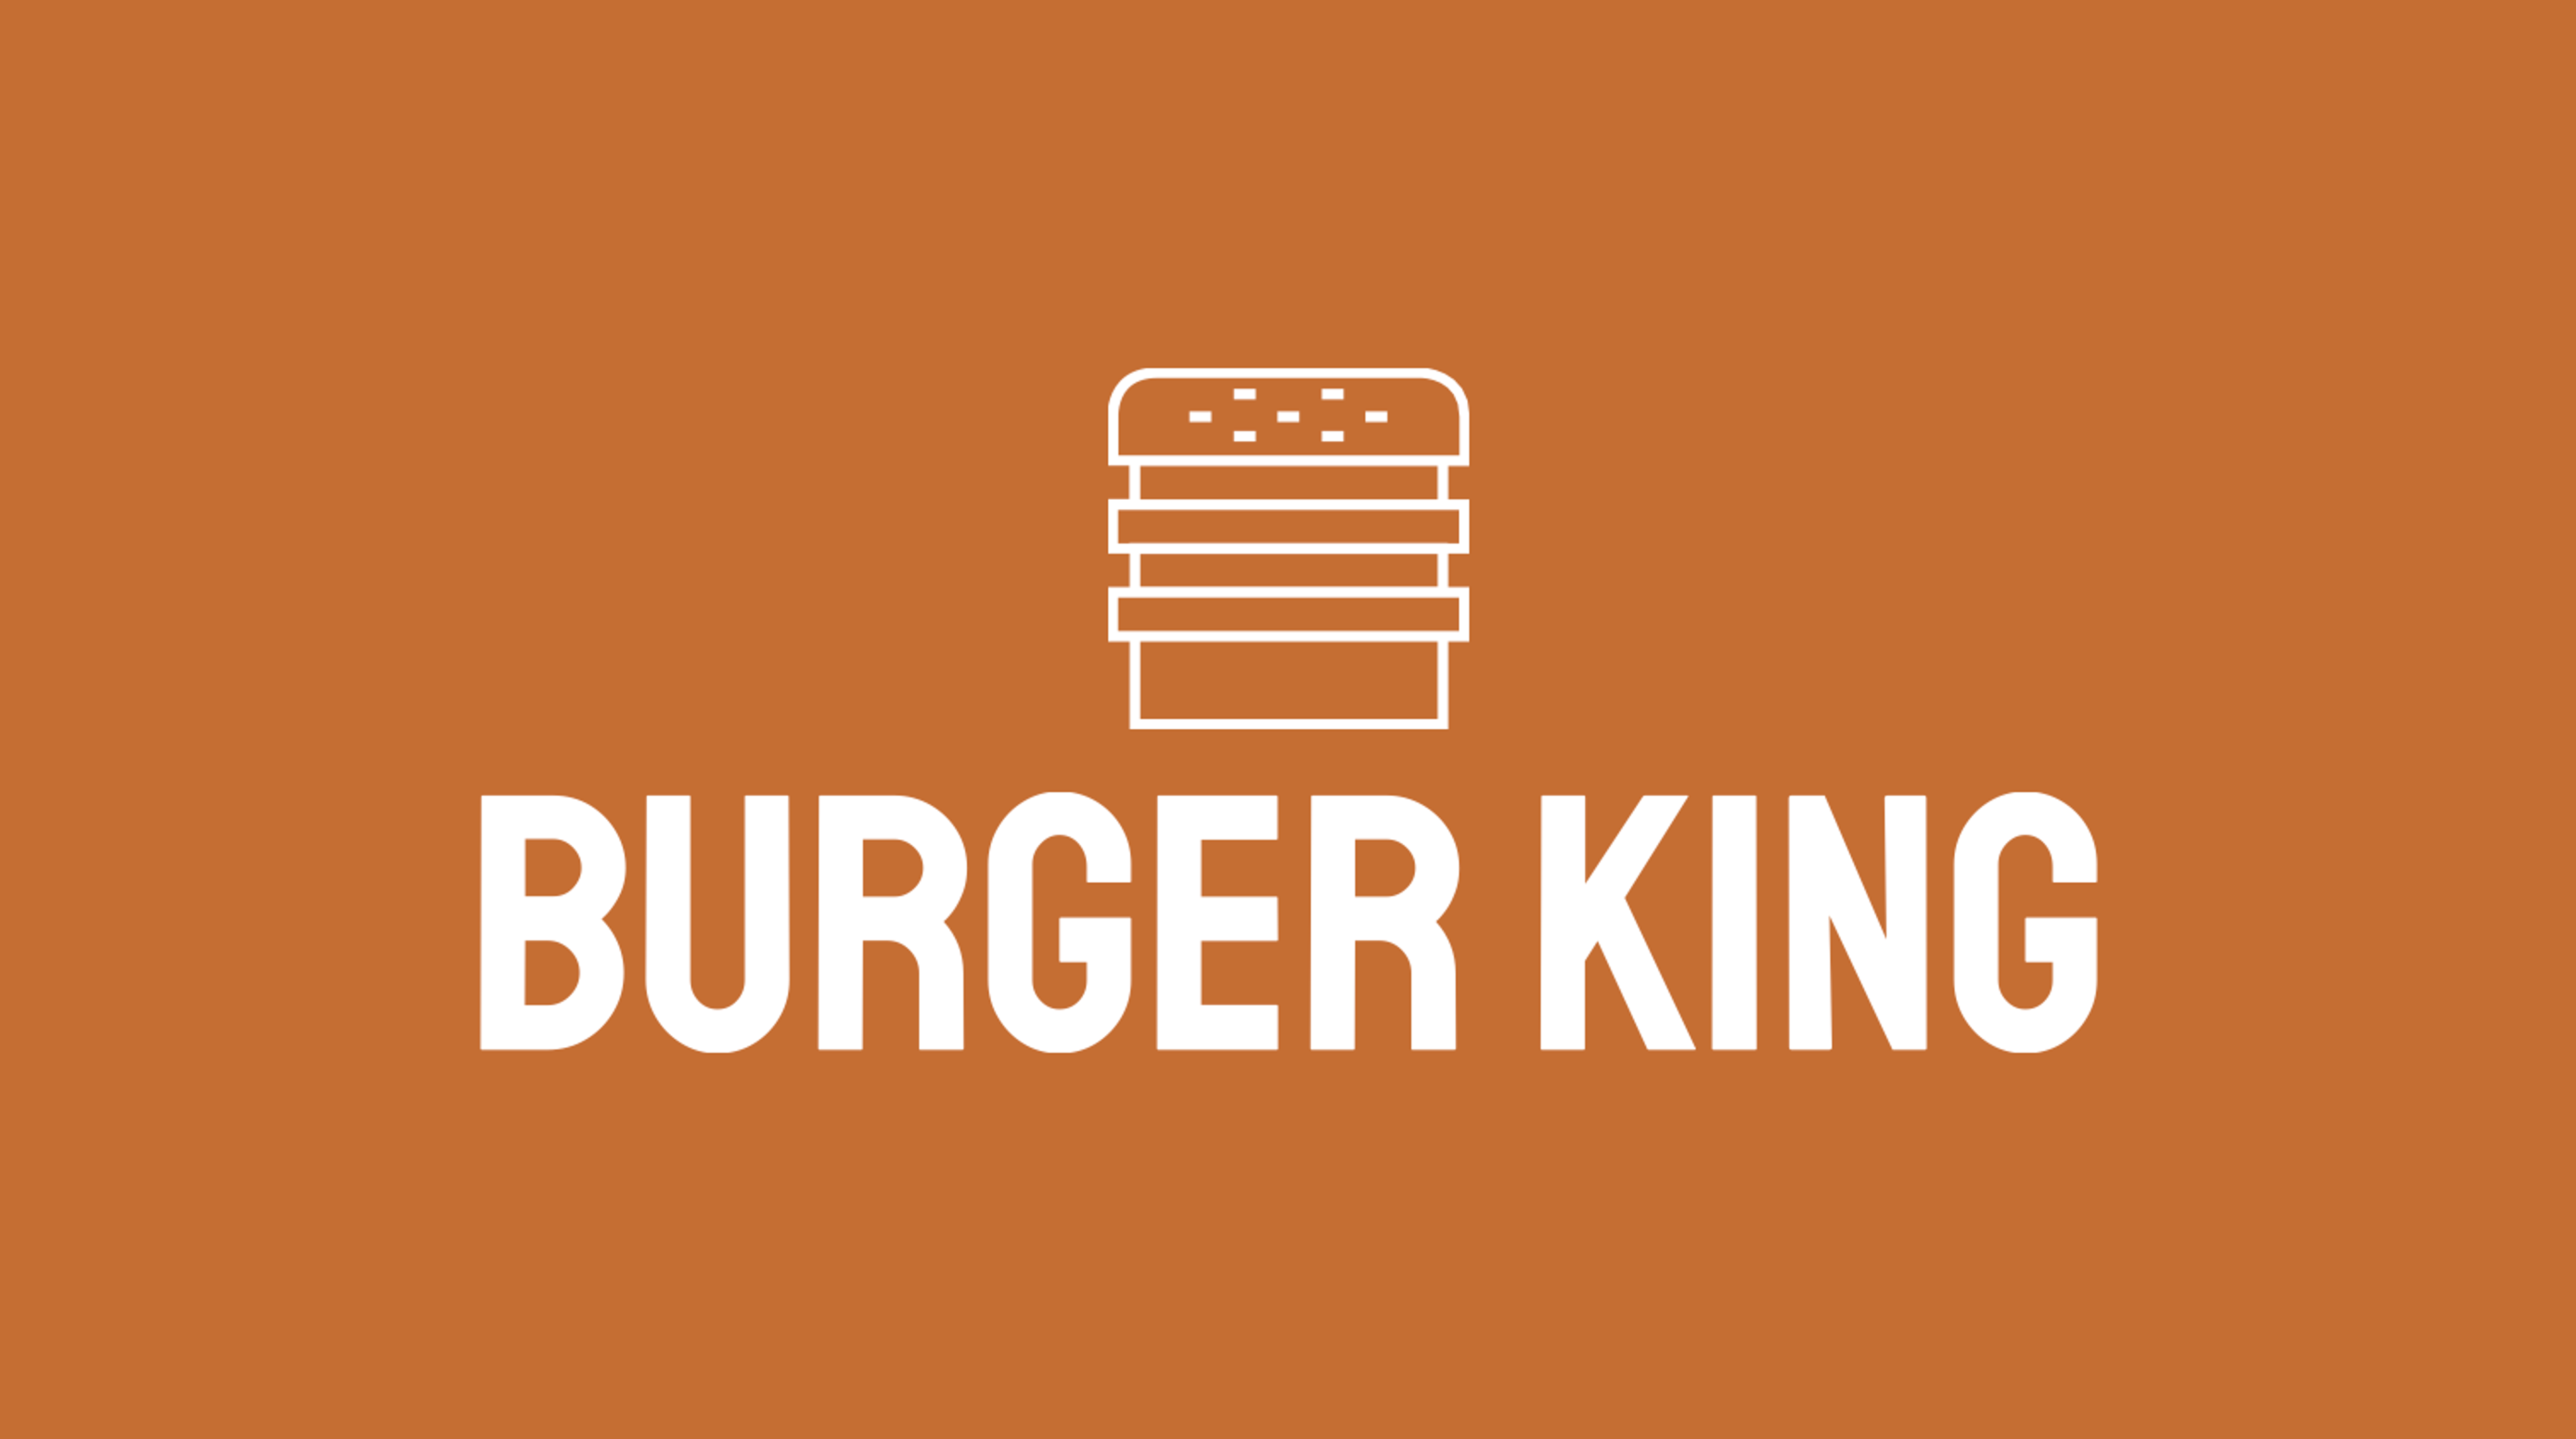 The Burger King Logo & Brand: Consistent Branding Since 1953